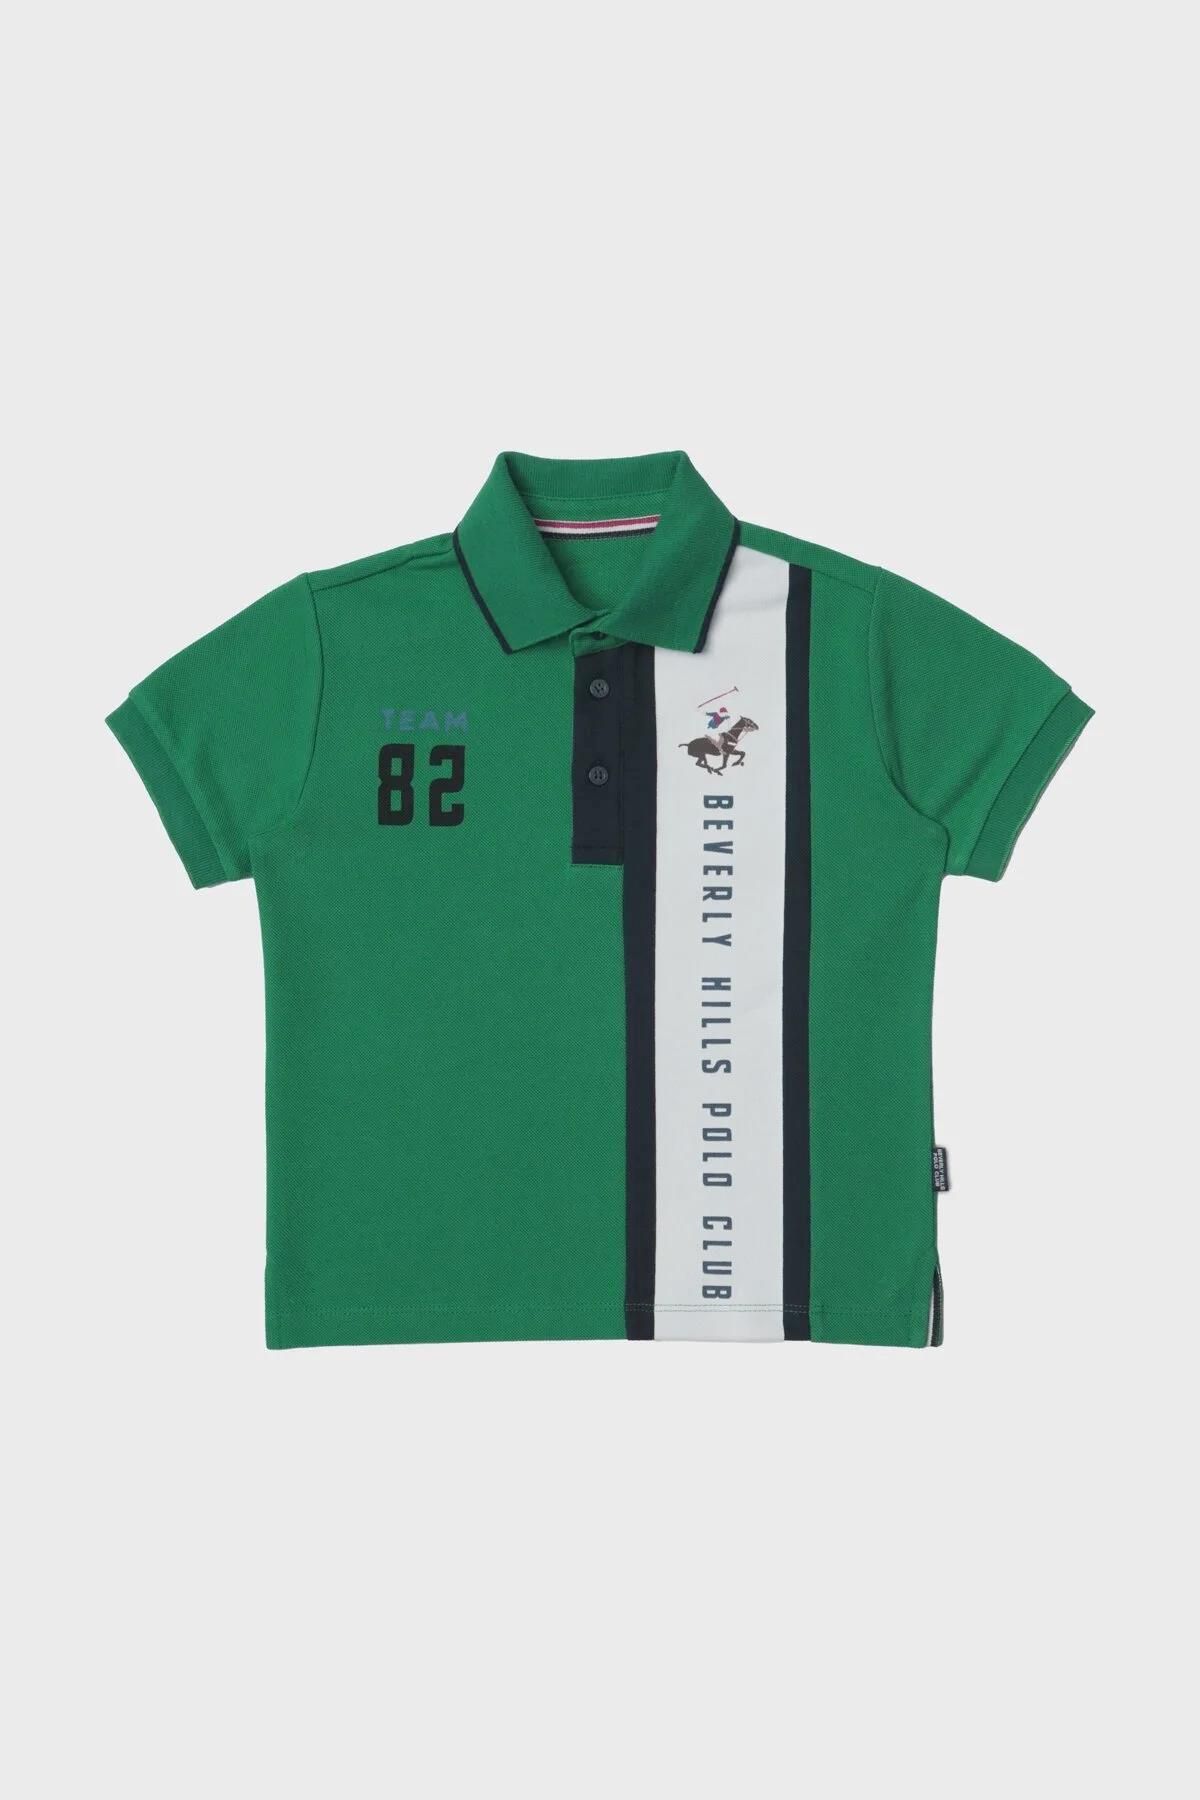 Beverly Hills Polo Club Bg Store Erkek Çocuk Yeşil T-shirt 23ss2bhb517